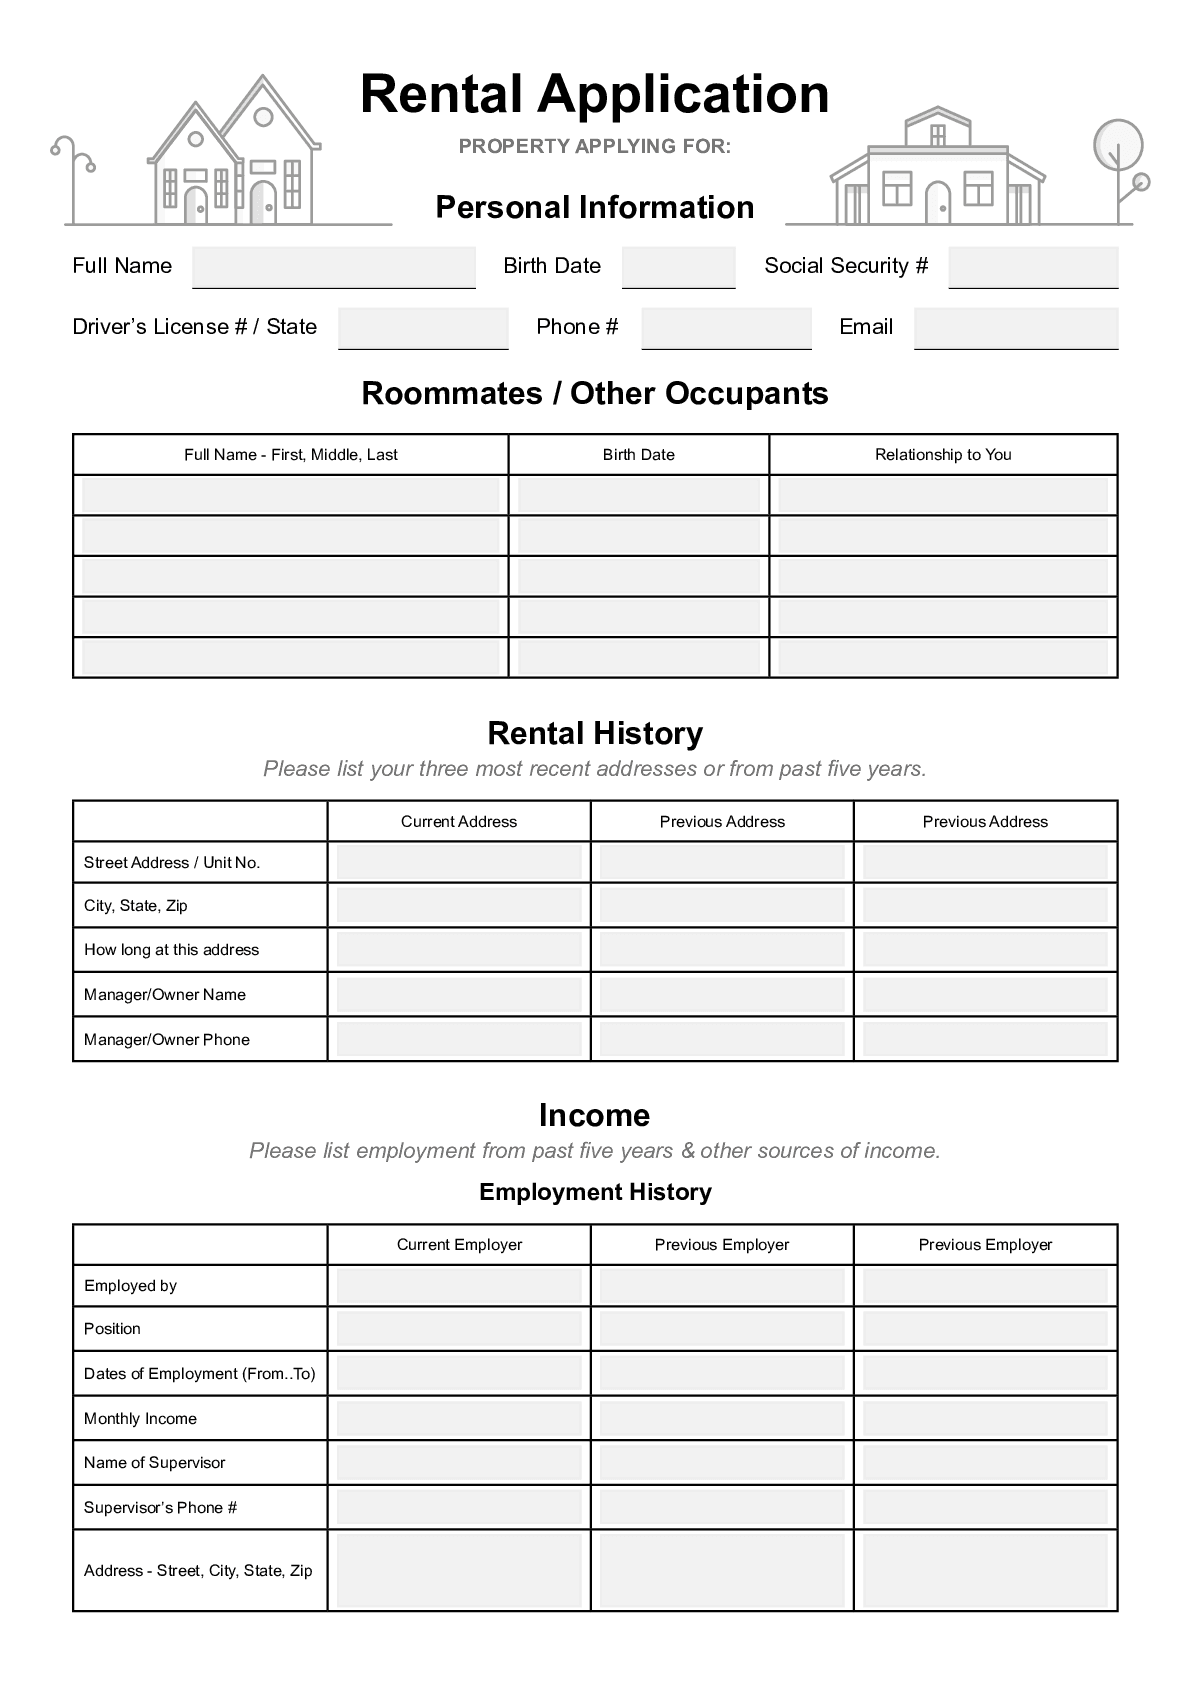 official-arizona-rental-application-form-2020-pdf-template